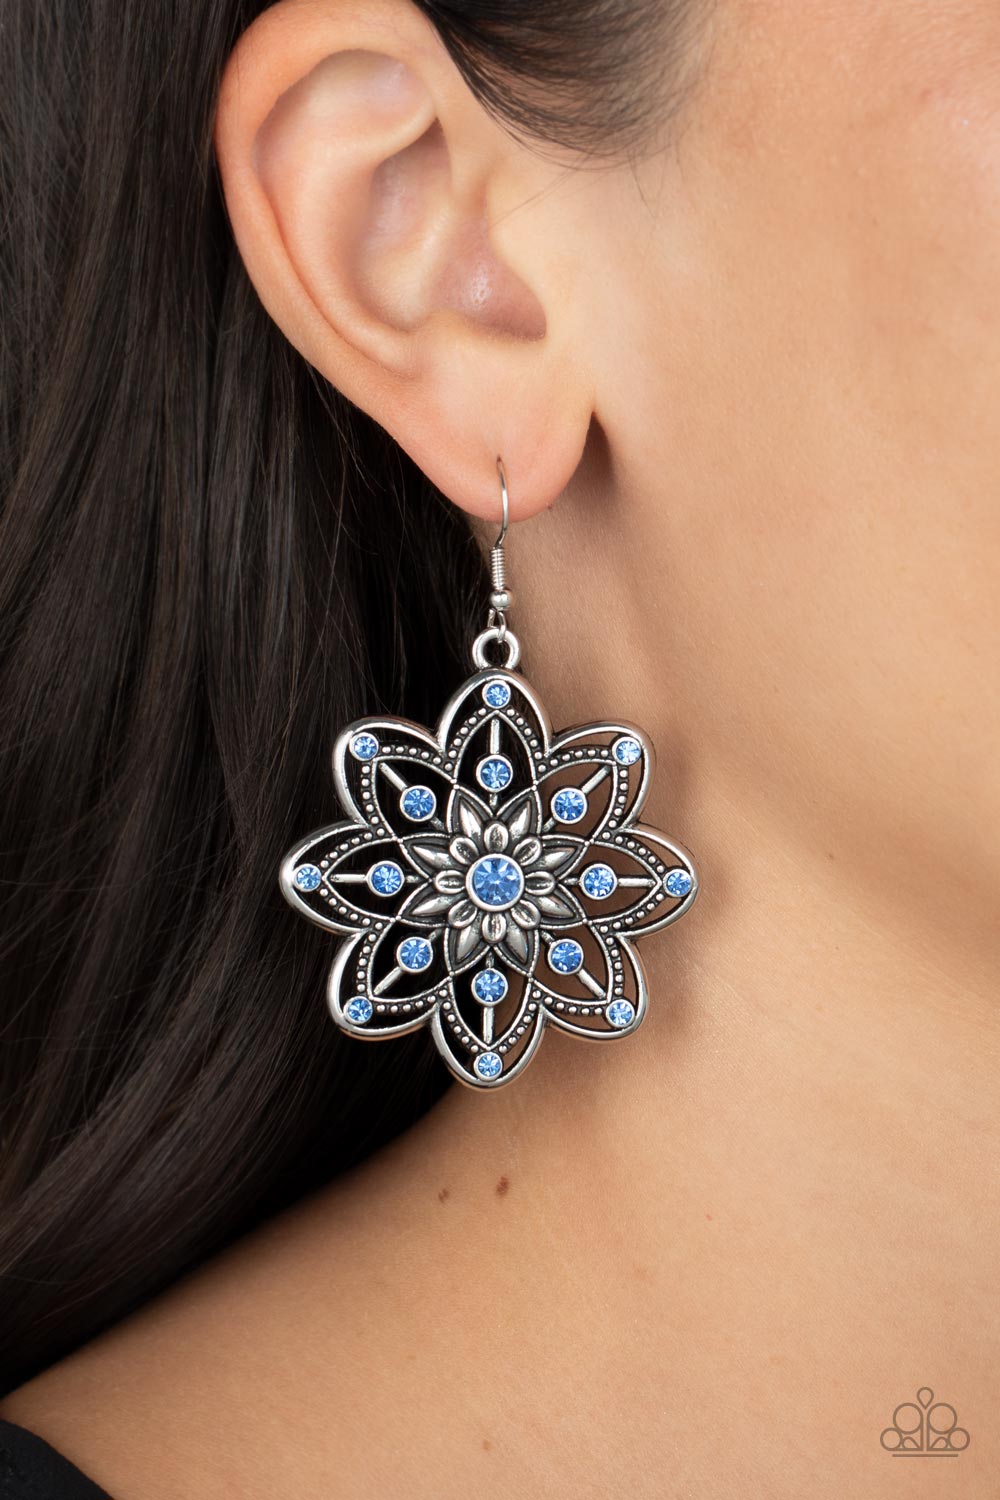 Prismatic Perennial Blue Rhinestone Earrings - Paparazzi Accessories- lightbox - CarasShop.com - $5 Jewelry by Cara Jewels